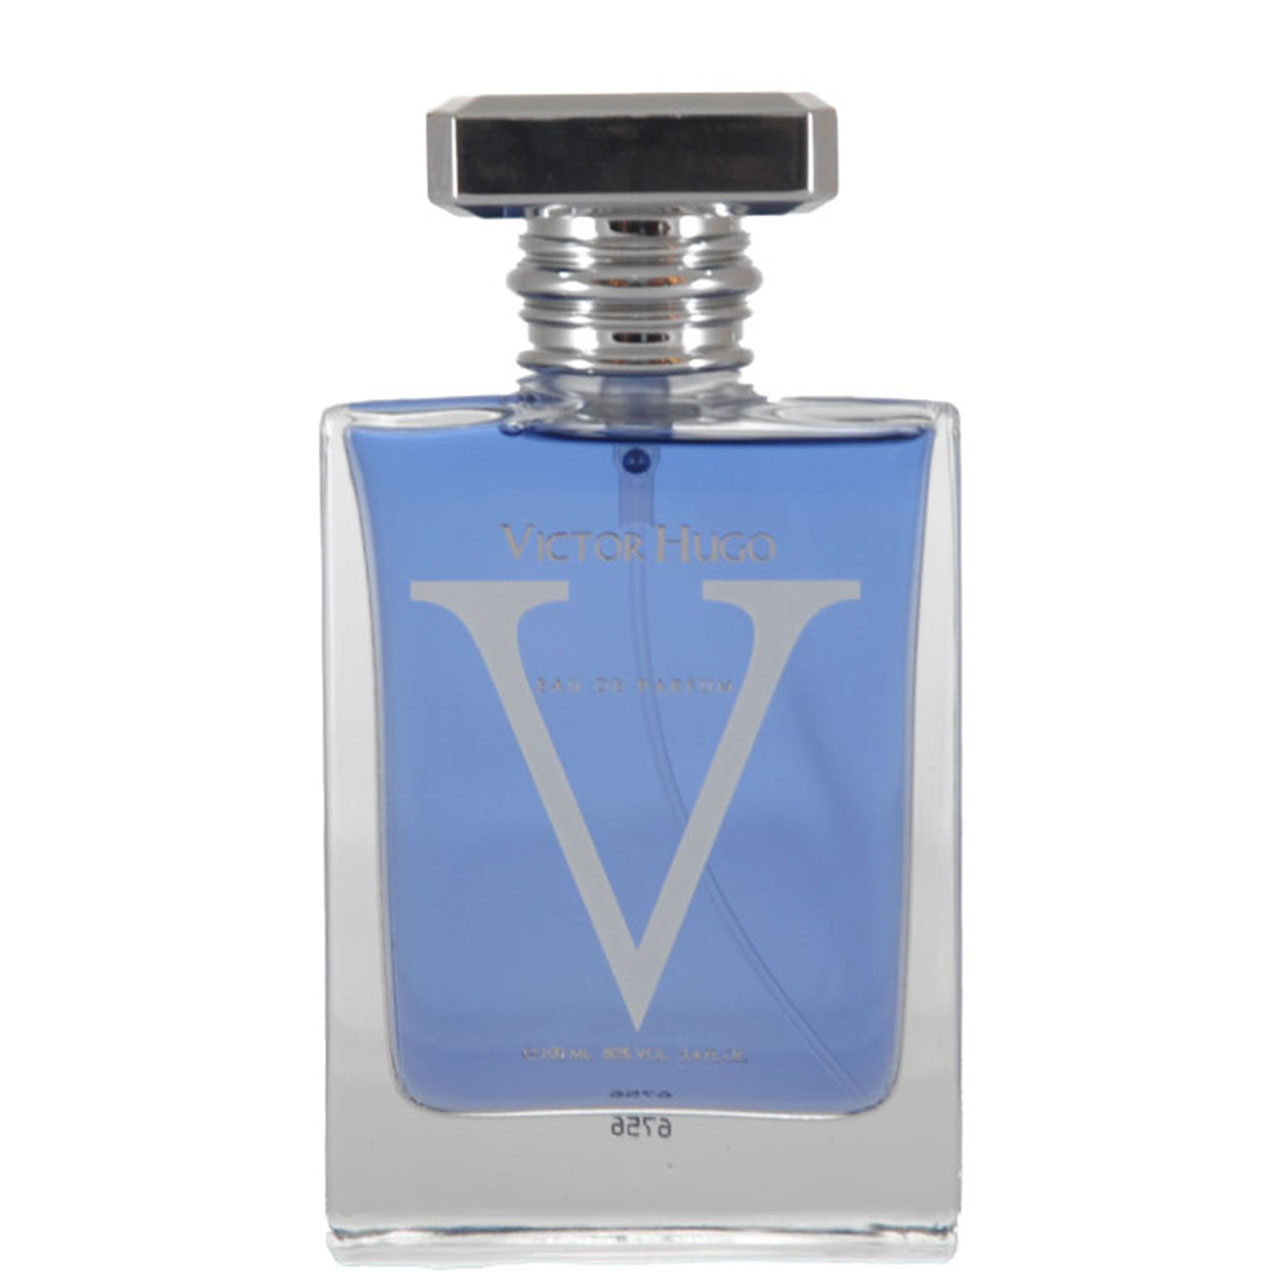 victor hugo parfum